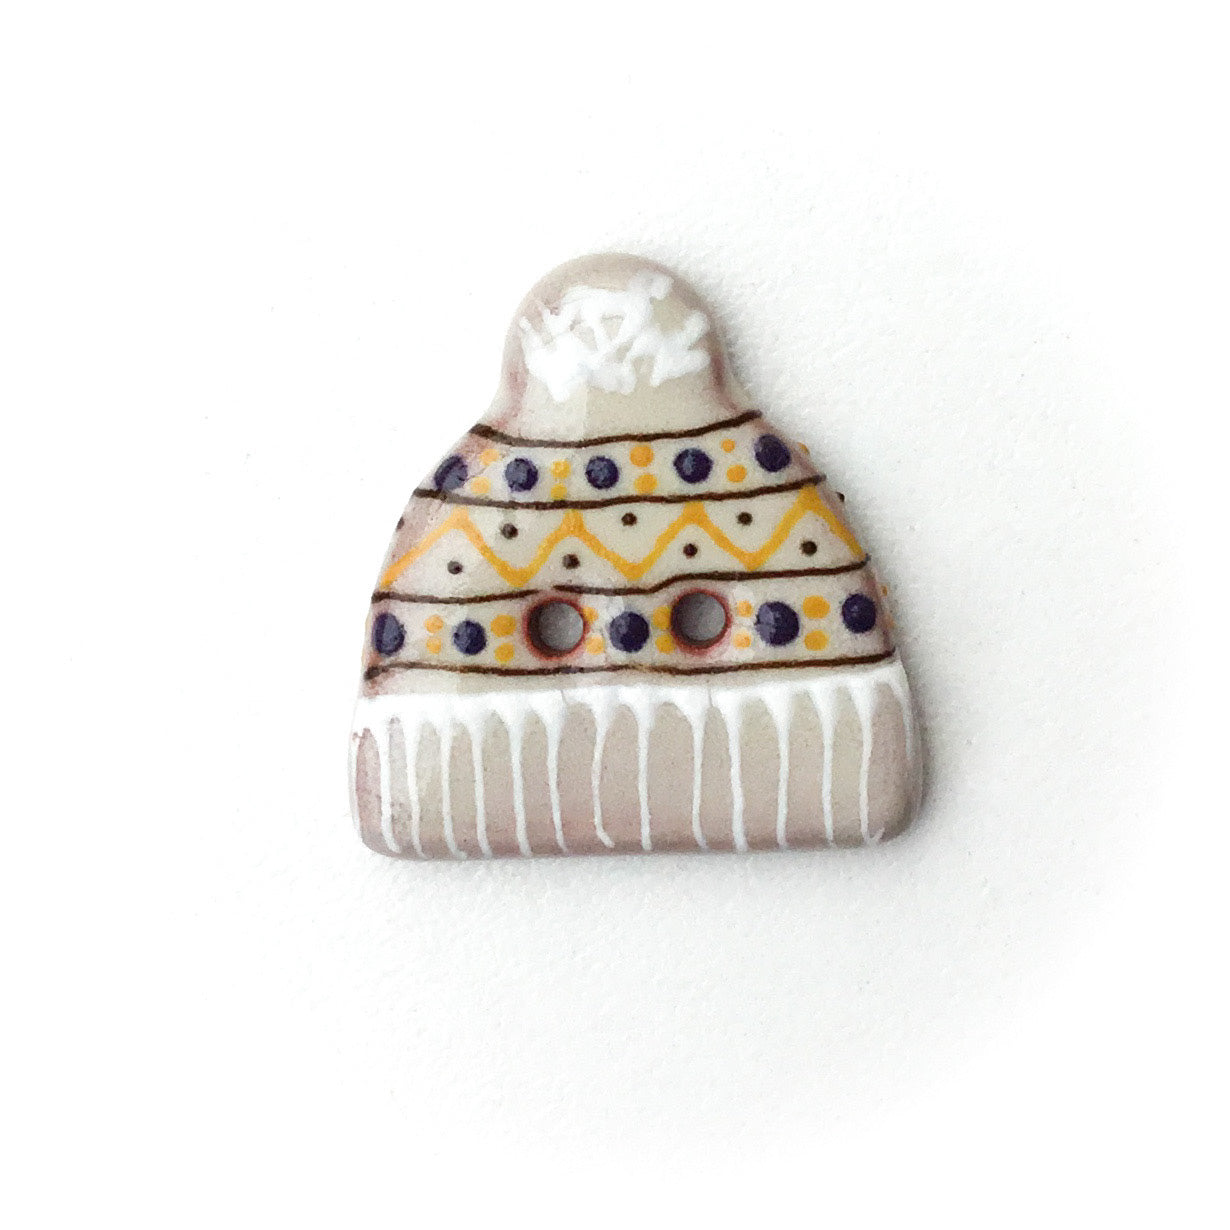 Decorative Ceramic Hat Buttons - 7/8" x 15/16"